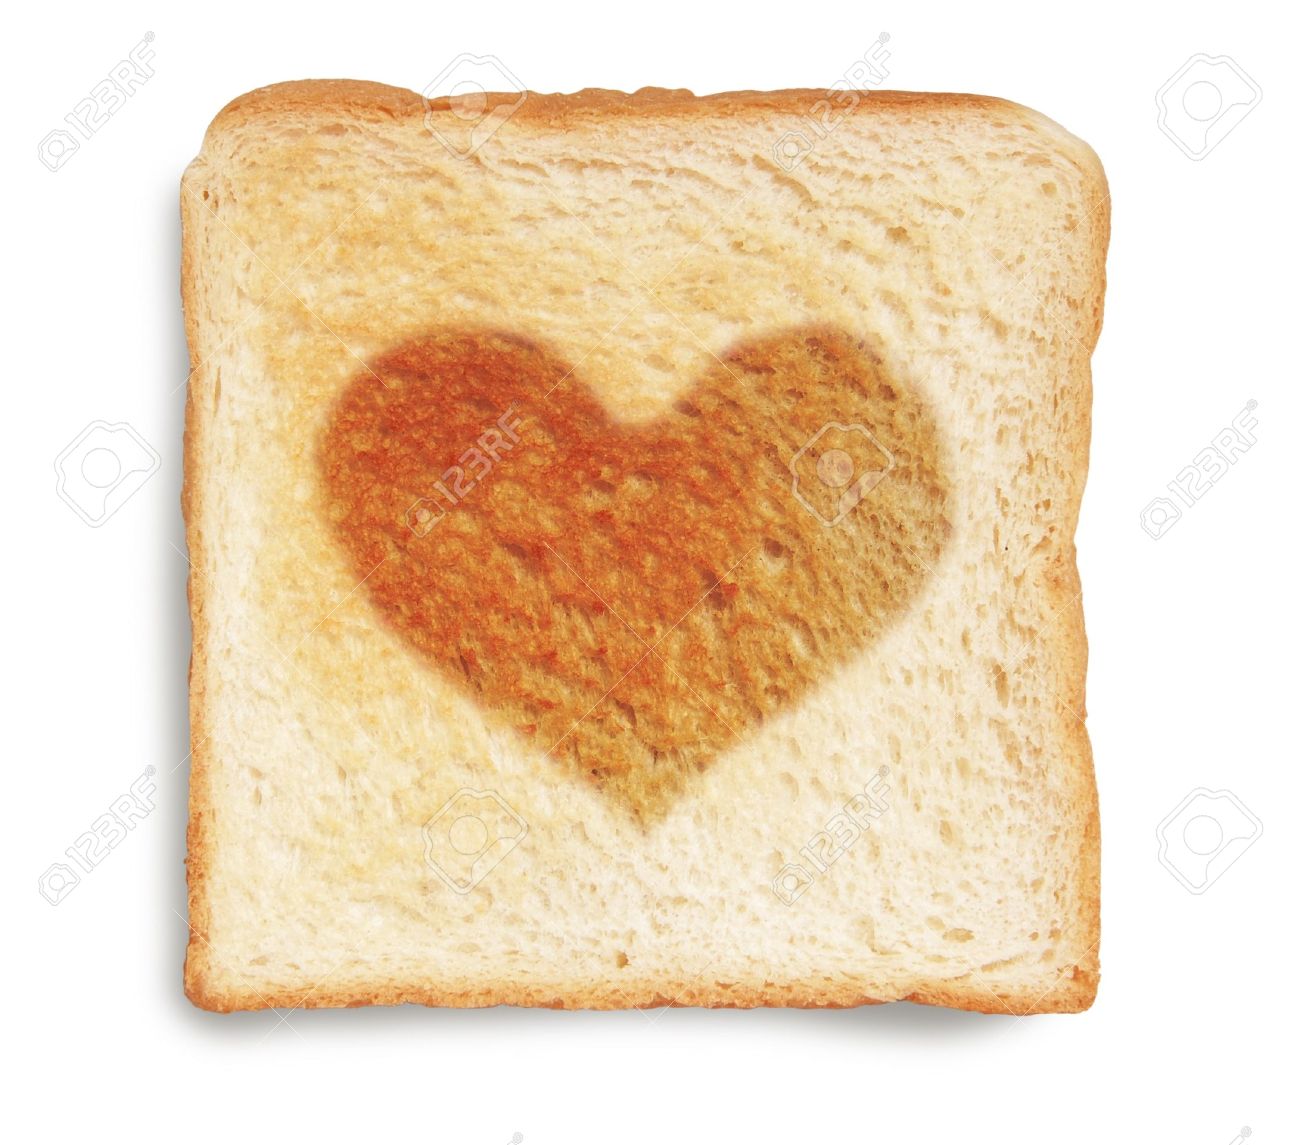 9353221-toasted-bread-with-heart-shape-burnt.jpg